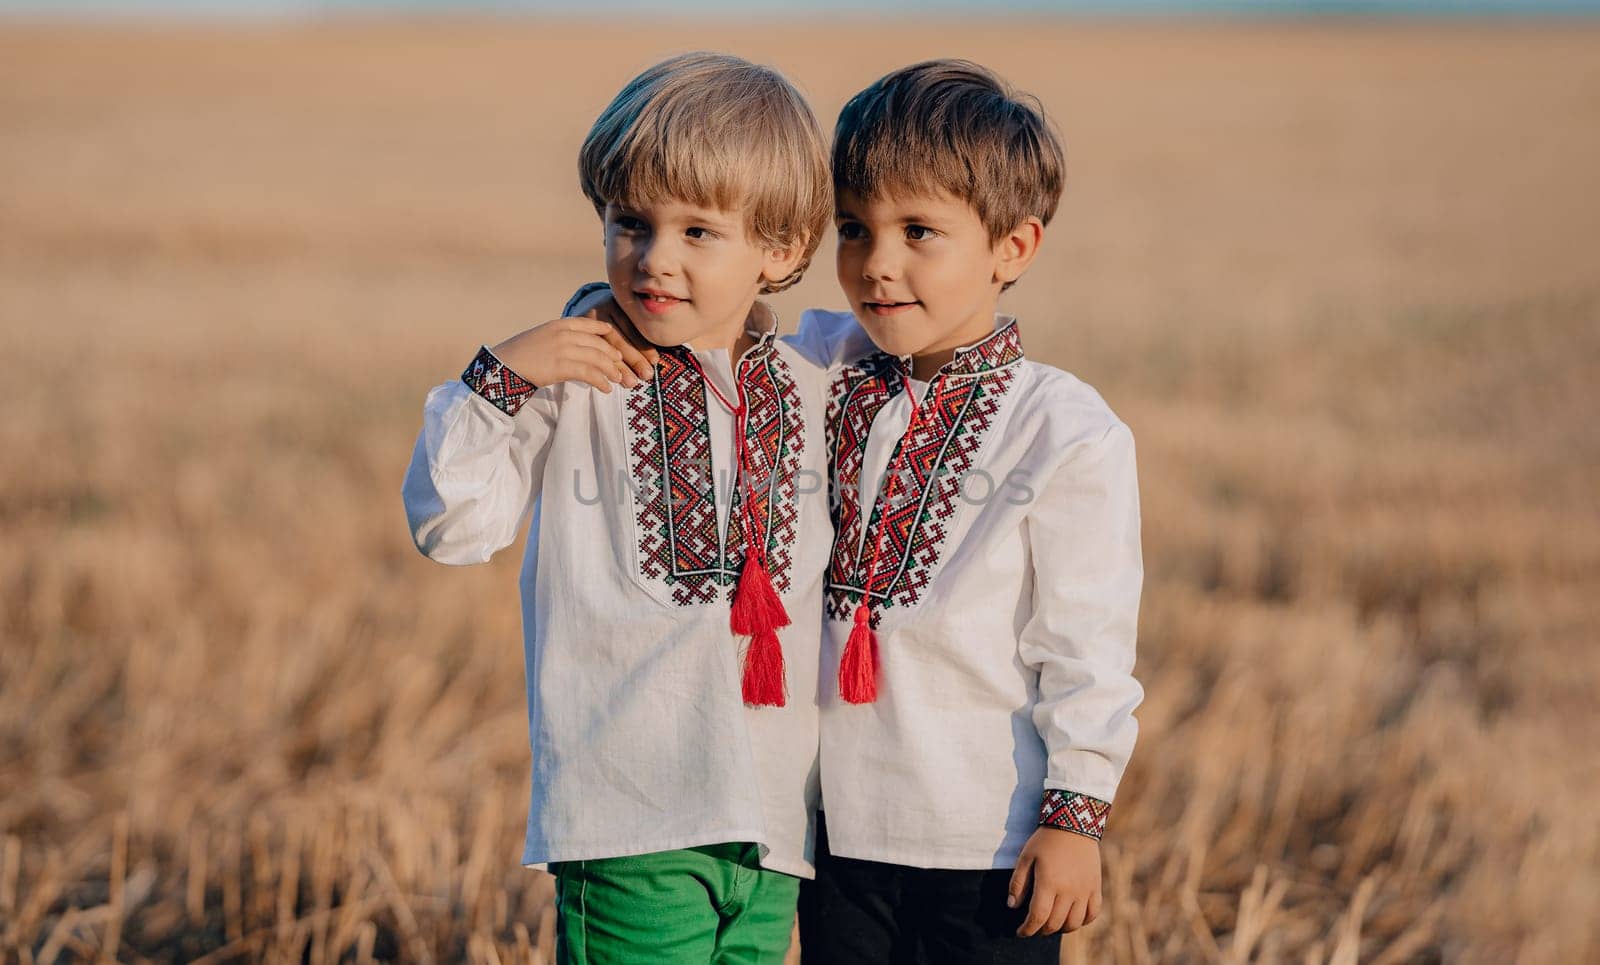 Happy glad boys - Ukrainian patriots children. Ukraine, family, brothers twins, best friends, peace, freedom, win in war. High quality photo